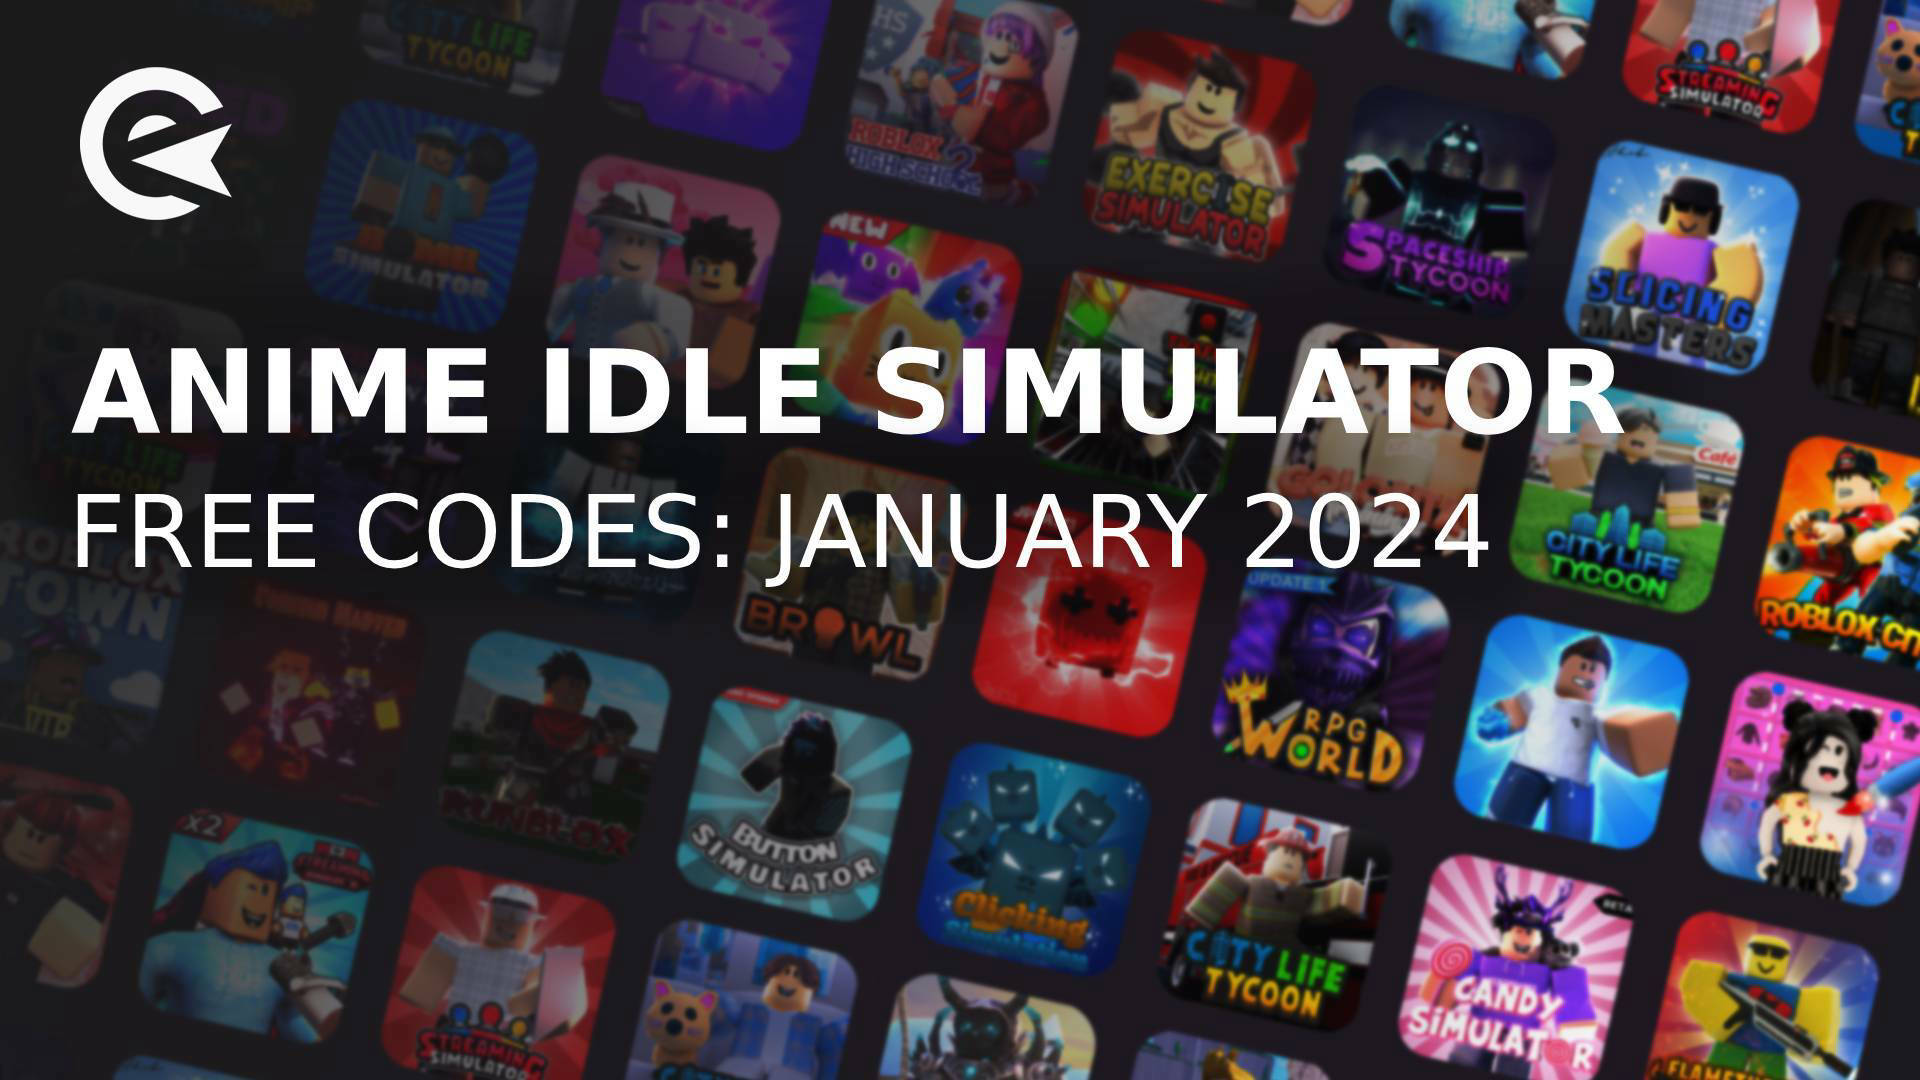 Anime Idle Simulator Codes for January 2024